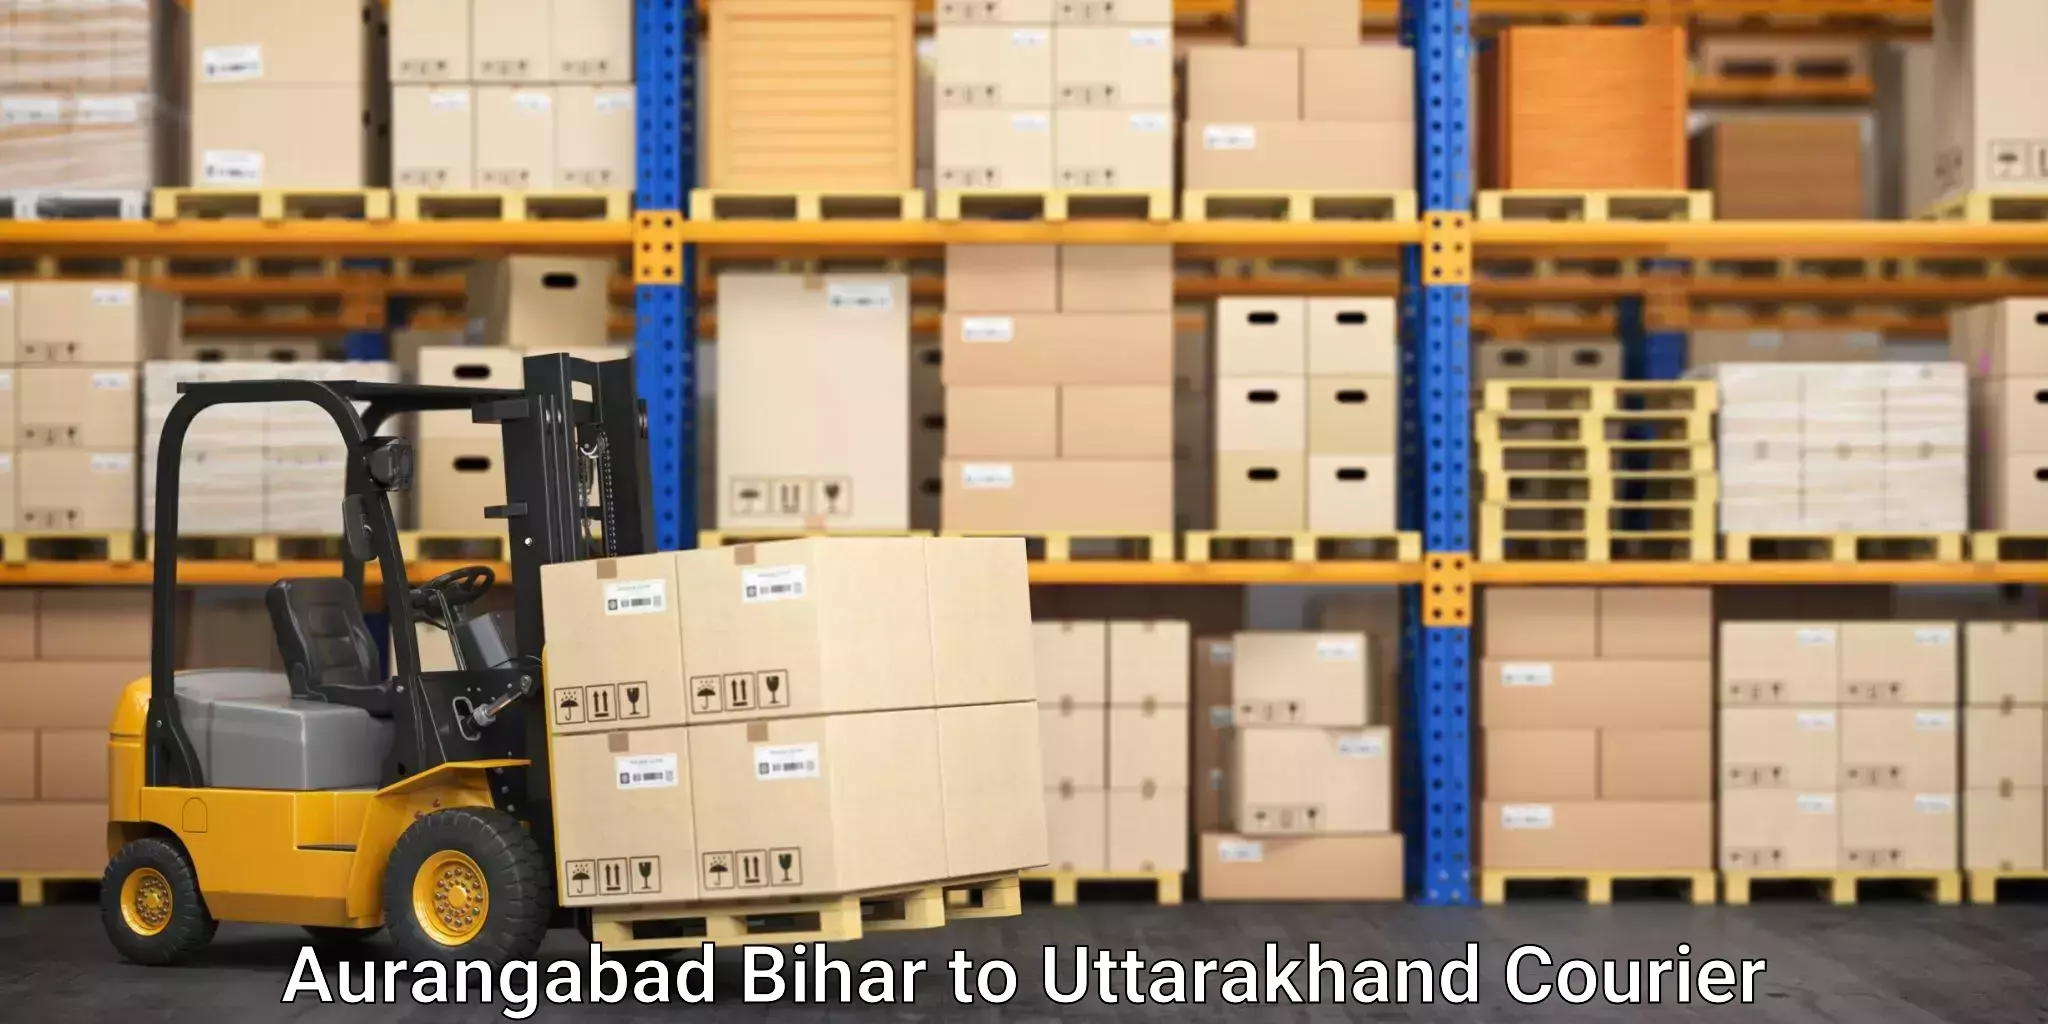 Full-service movers Aurangabad Bihar to Uttarakhand